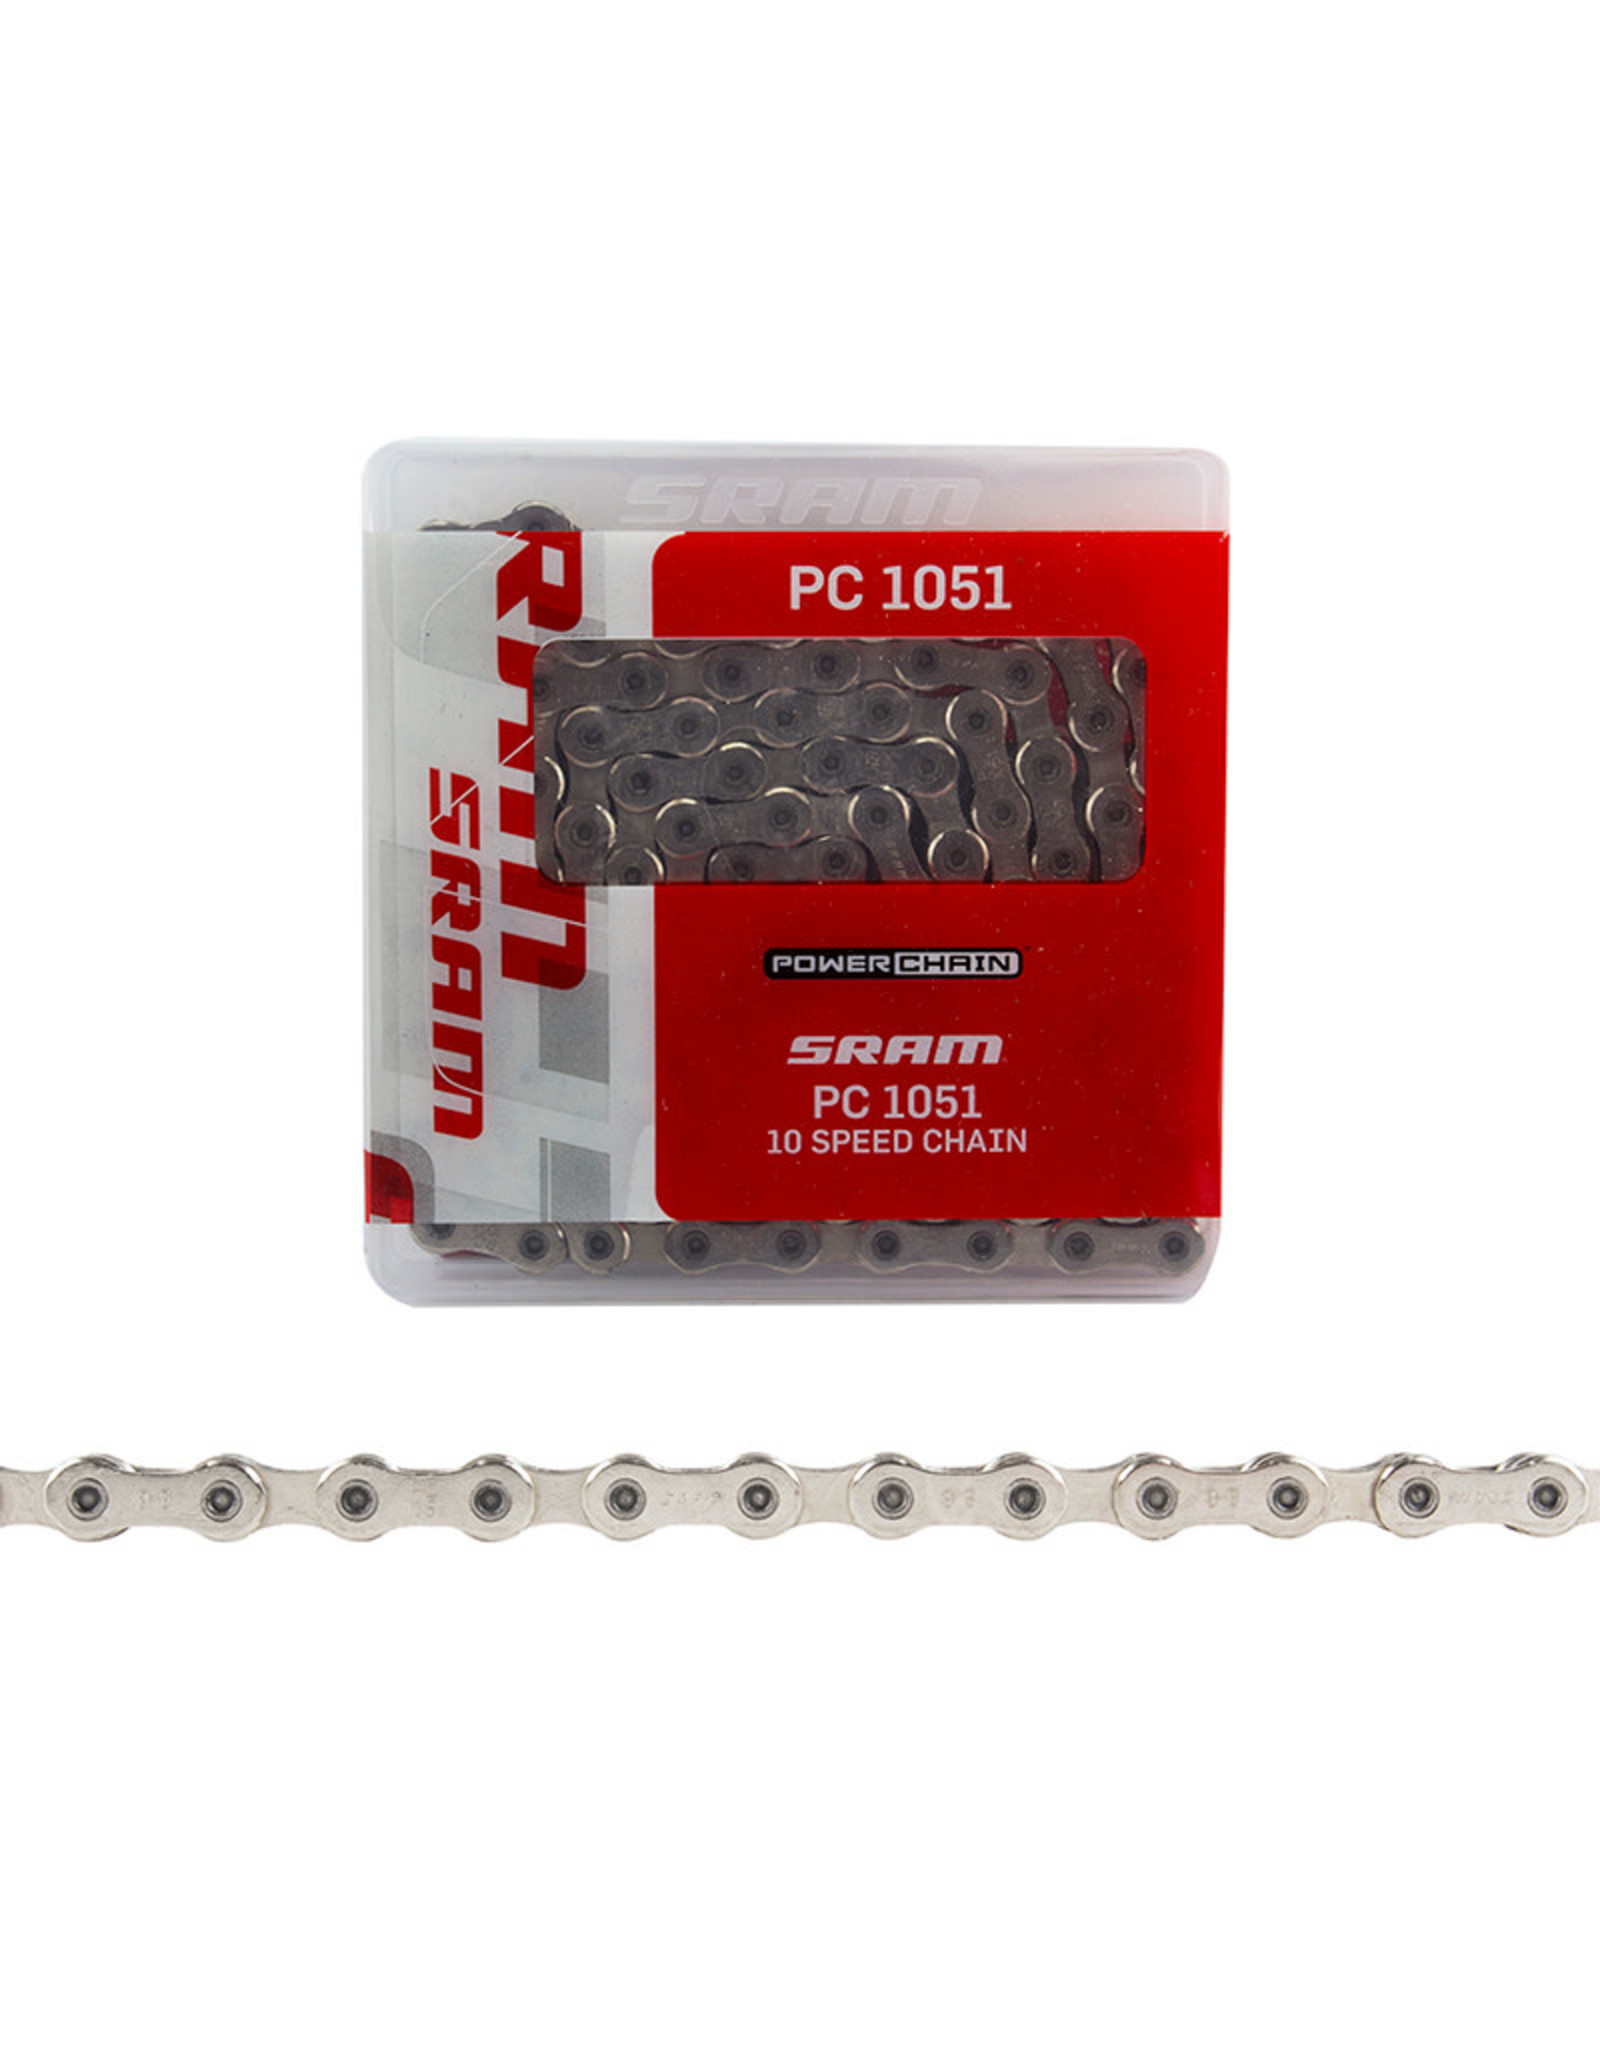 pc 1051 chain